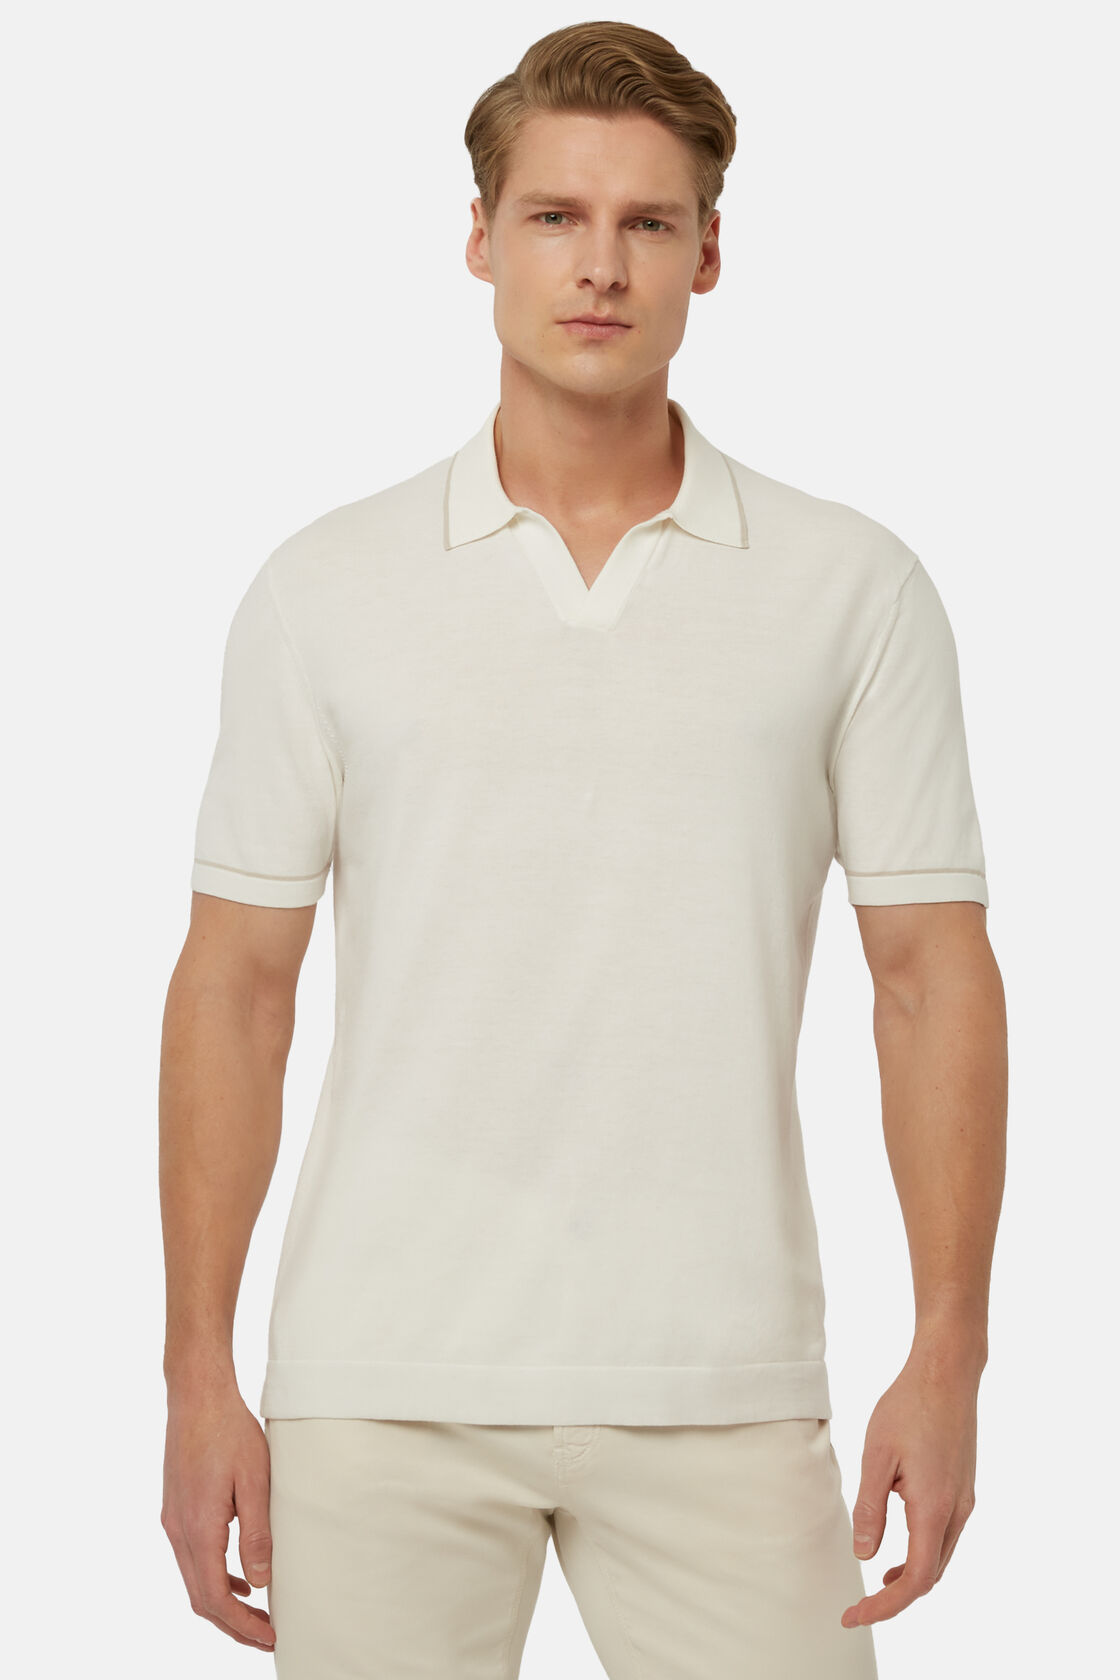 White Cotton Crepe Knit Polo Shirt, White, hi-res